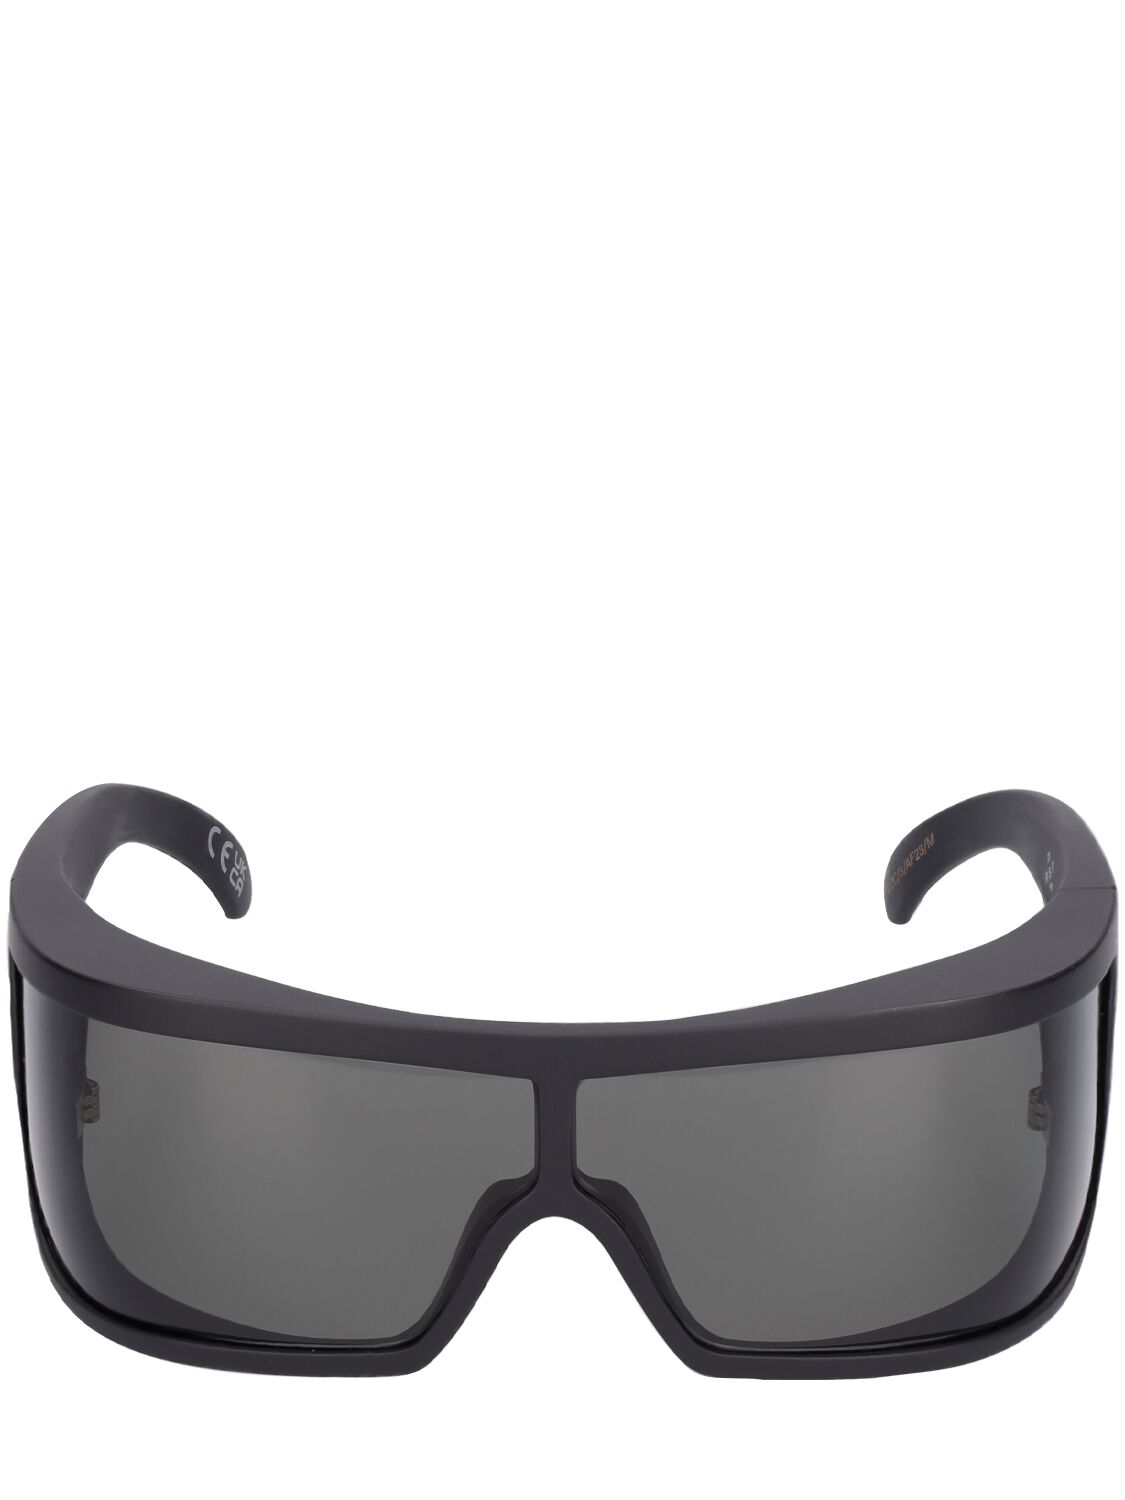 Image of Bones Black Mask Acetate Sunglasses